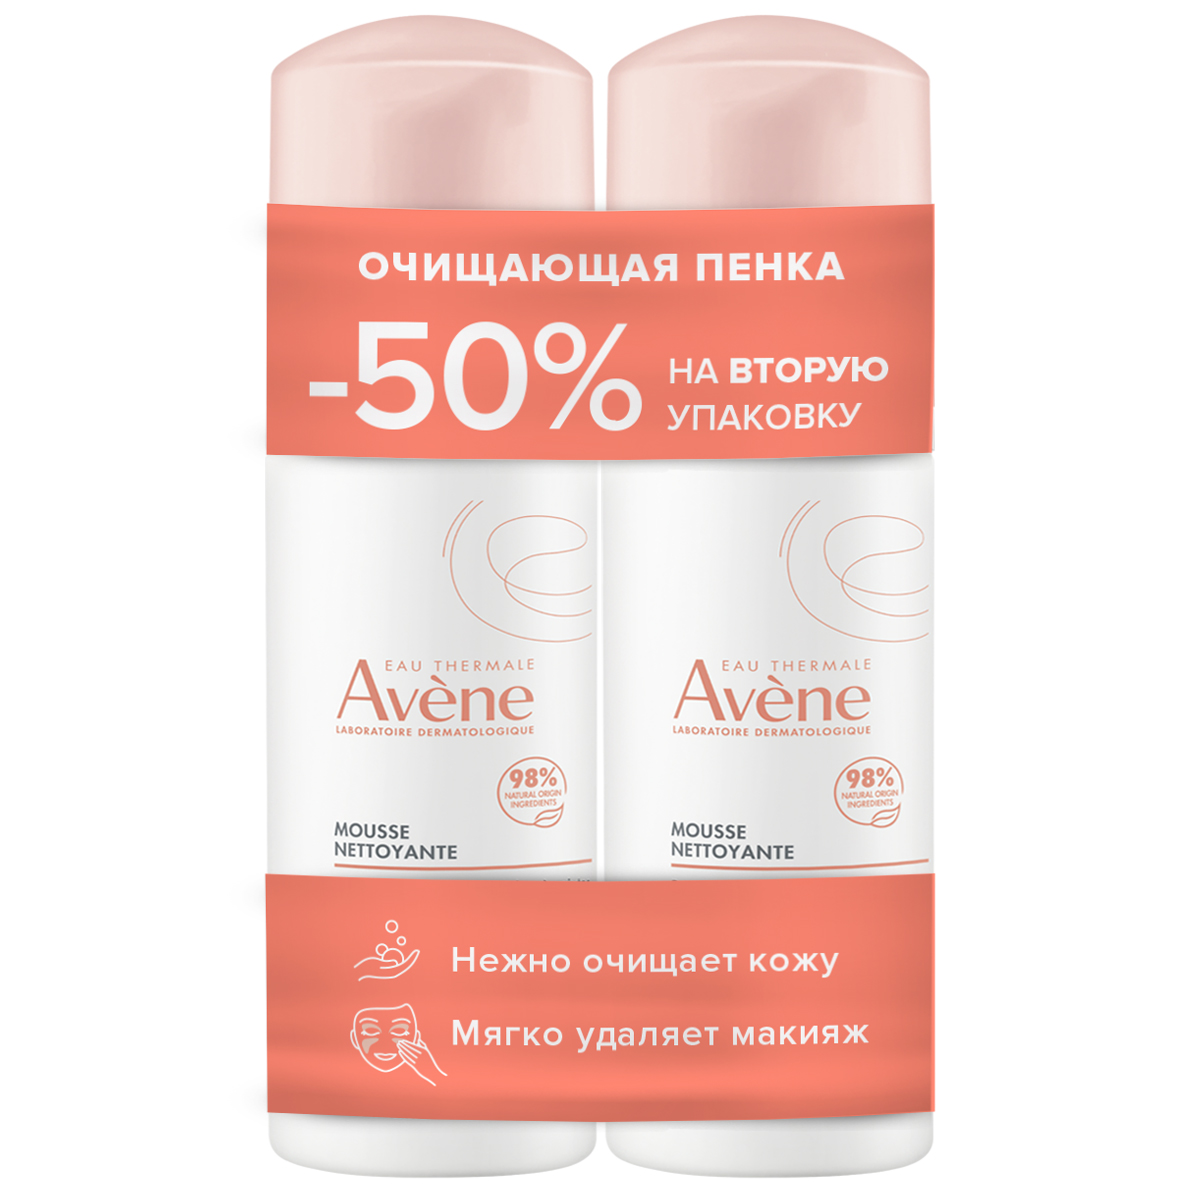 Avene Очищающая пенка для снятия макияжа, 150 мл х 2 шт (Avene, Sensibles)